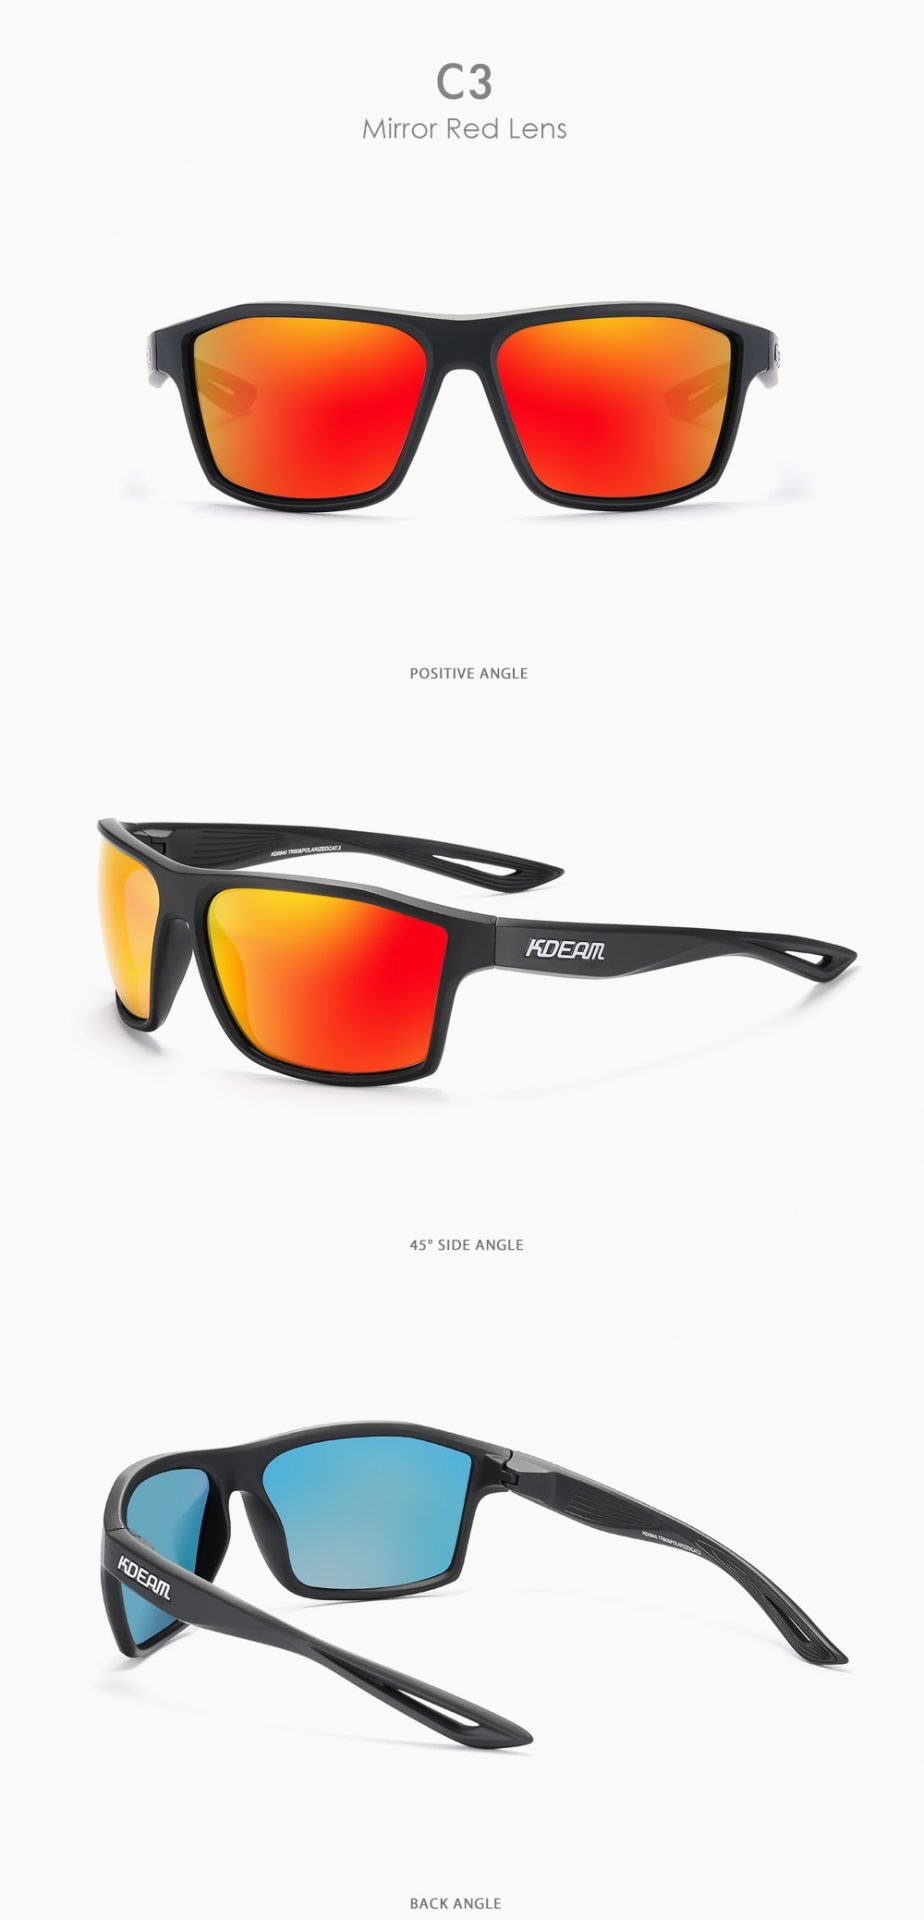 Outdoor Lifestyles Men's Sunglasses Polarized Square